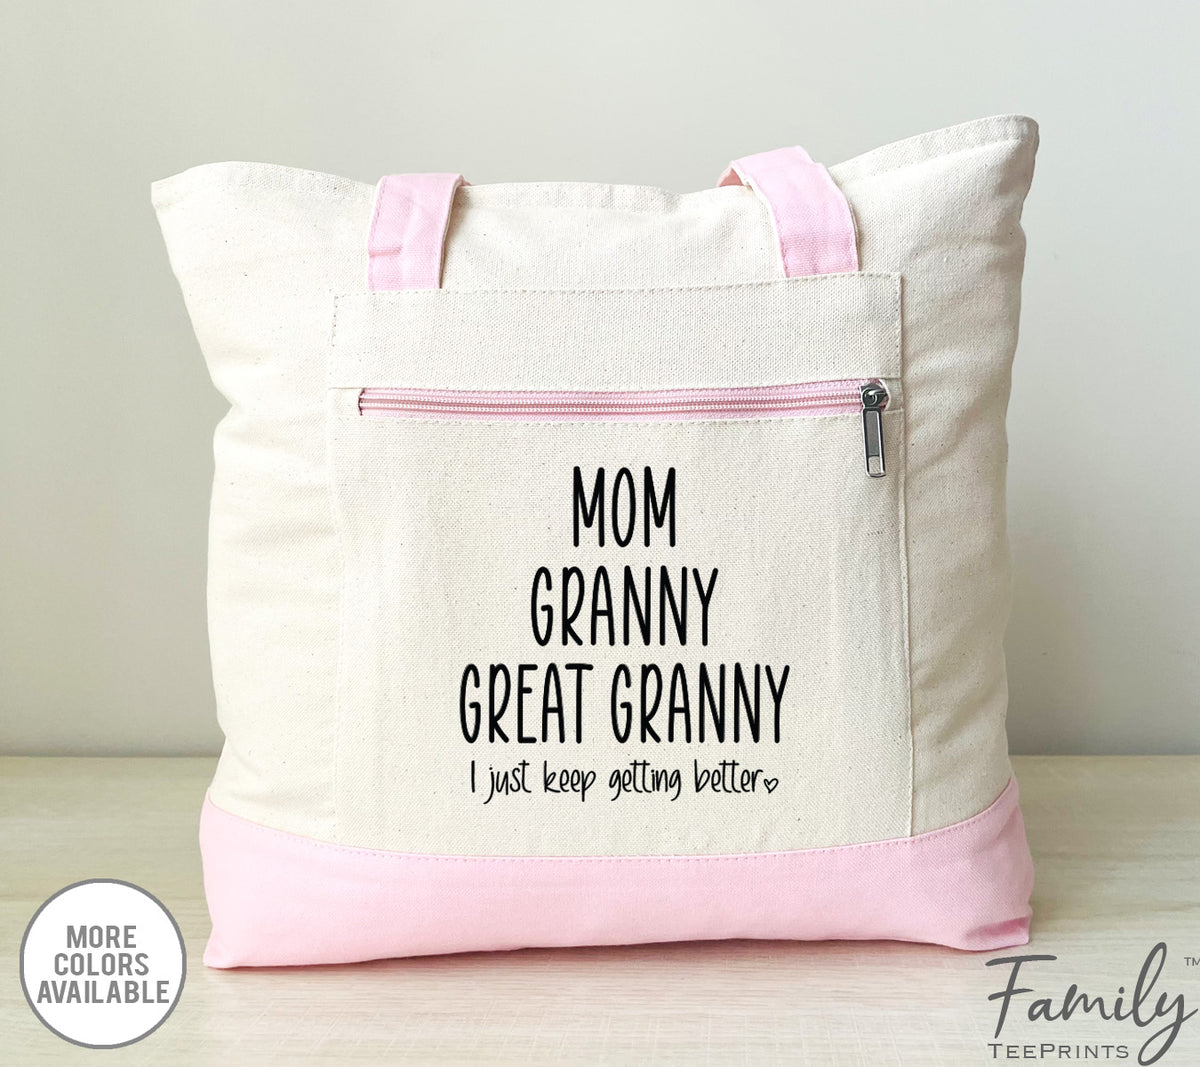 Mom Granny Great Granny - Zippered Tote Bag - Two Tone Bag - Great Granny Gift - familyteeprints